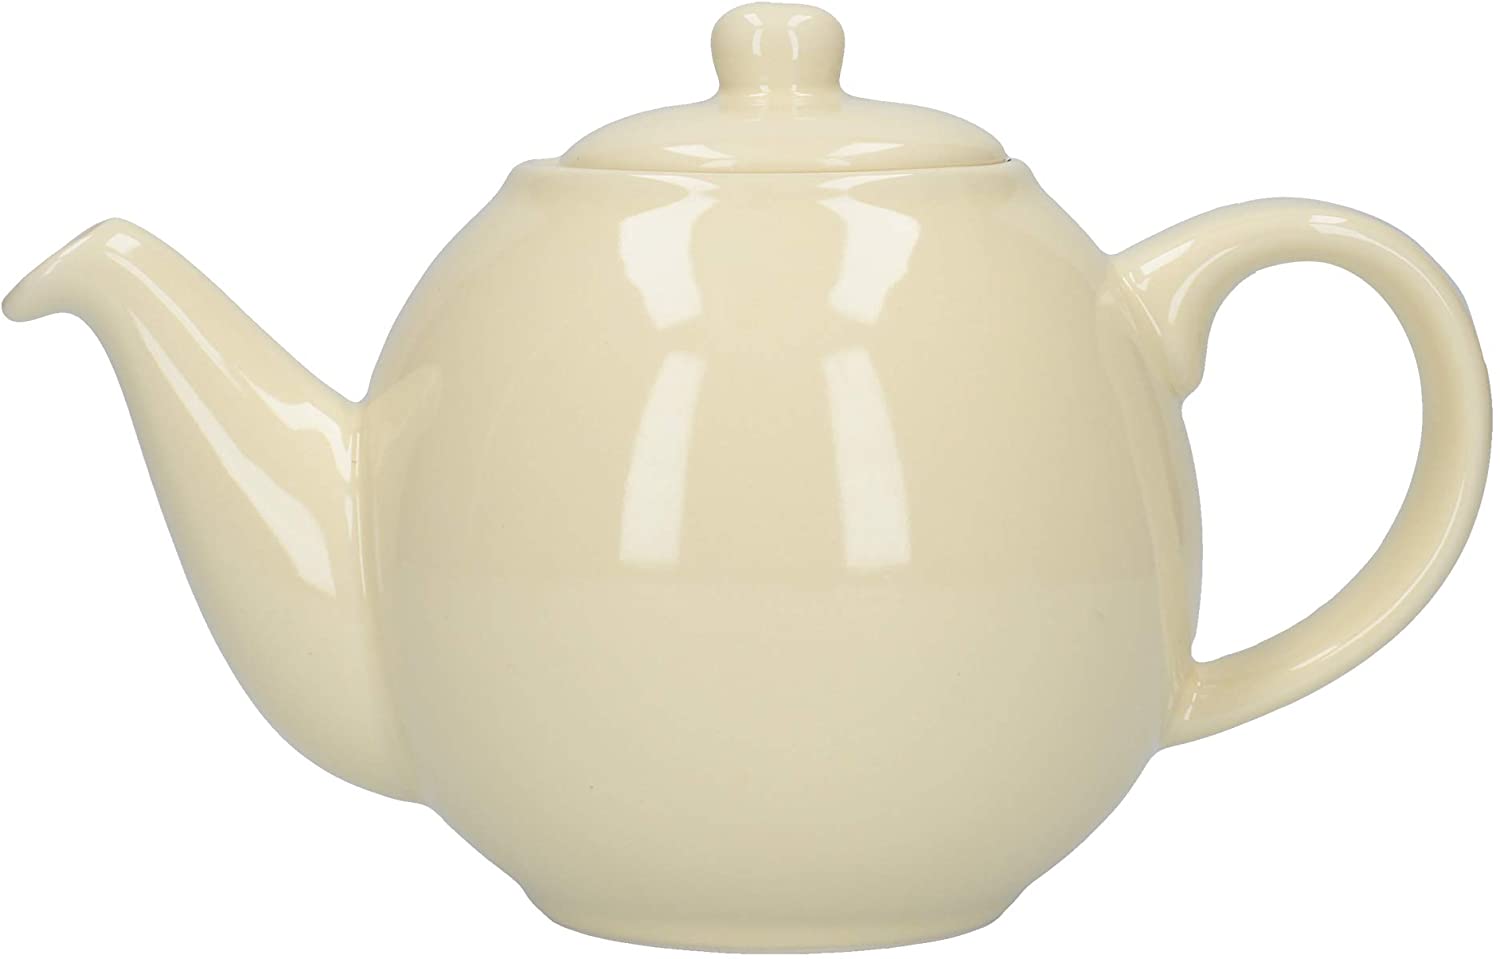 Dexam London Pottery Co 2 Cup Globe Teapot Ivory